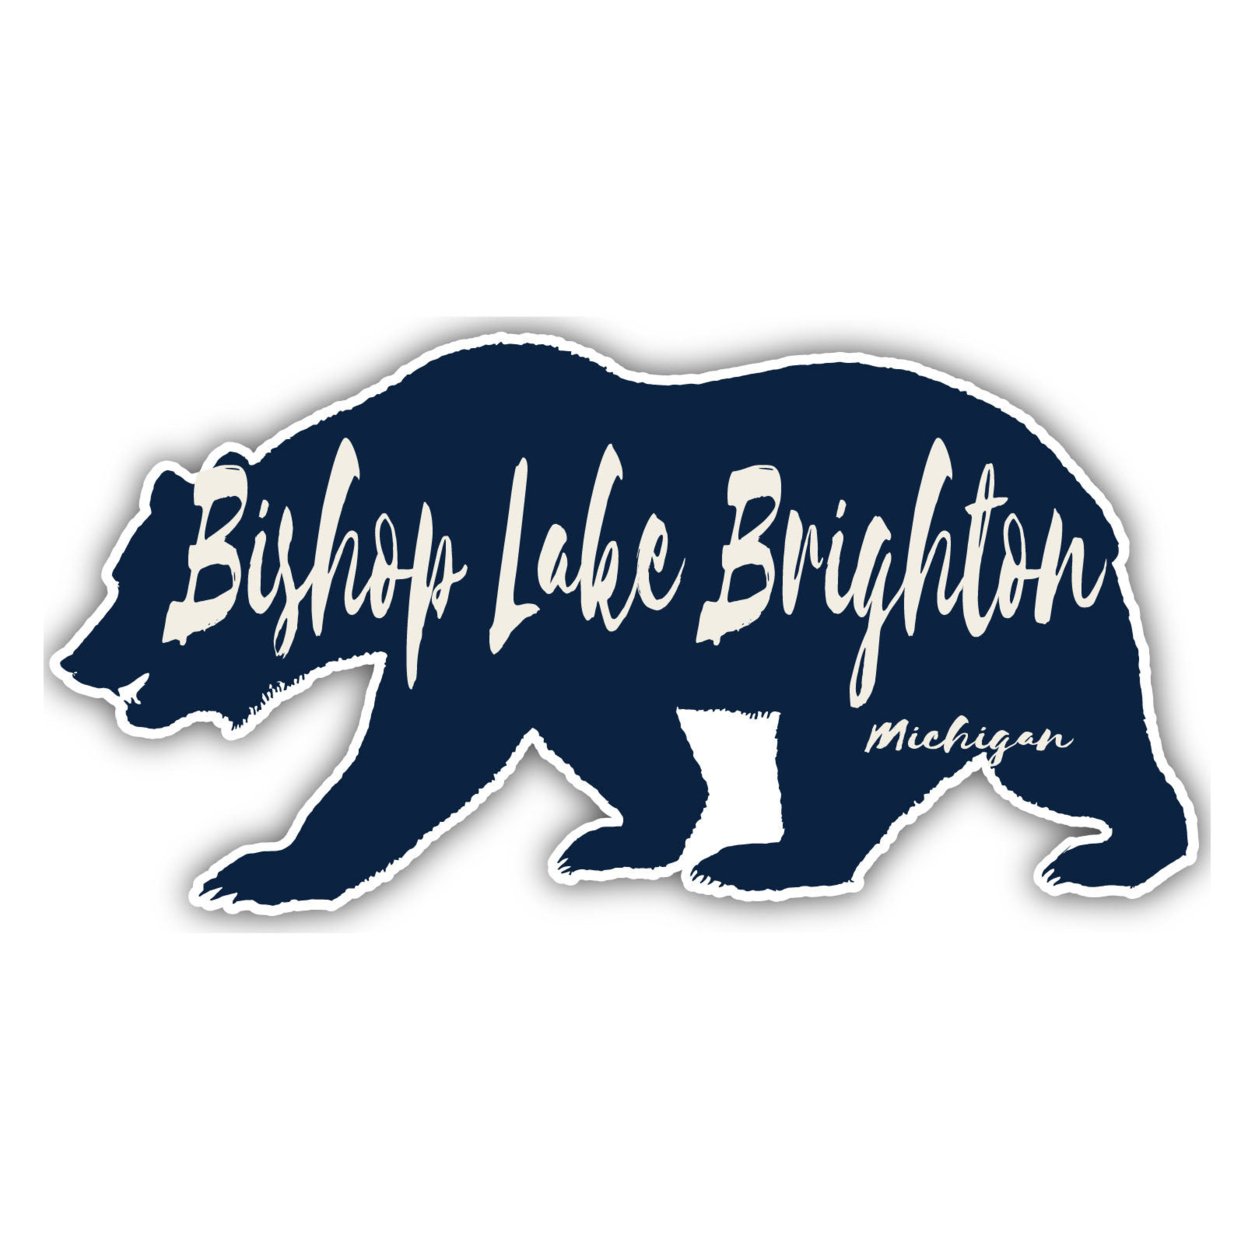 Bishop Lake Brighton Michigan Souvenir Decorative Stickers (Choose Theme And Size) - 4-Pack, 4-Inch, Bear